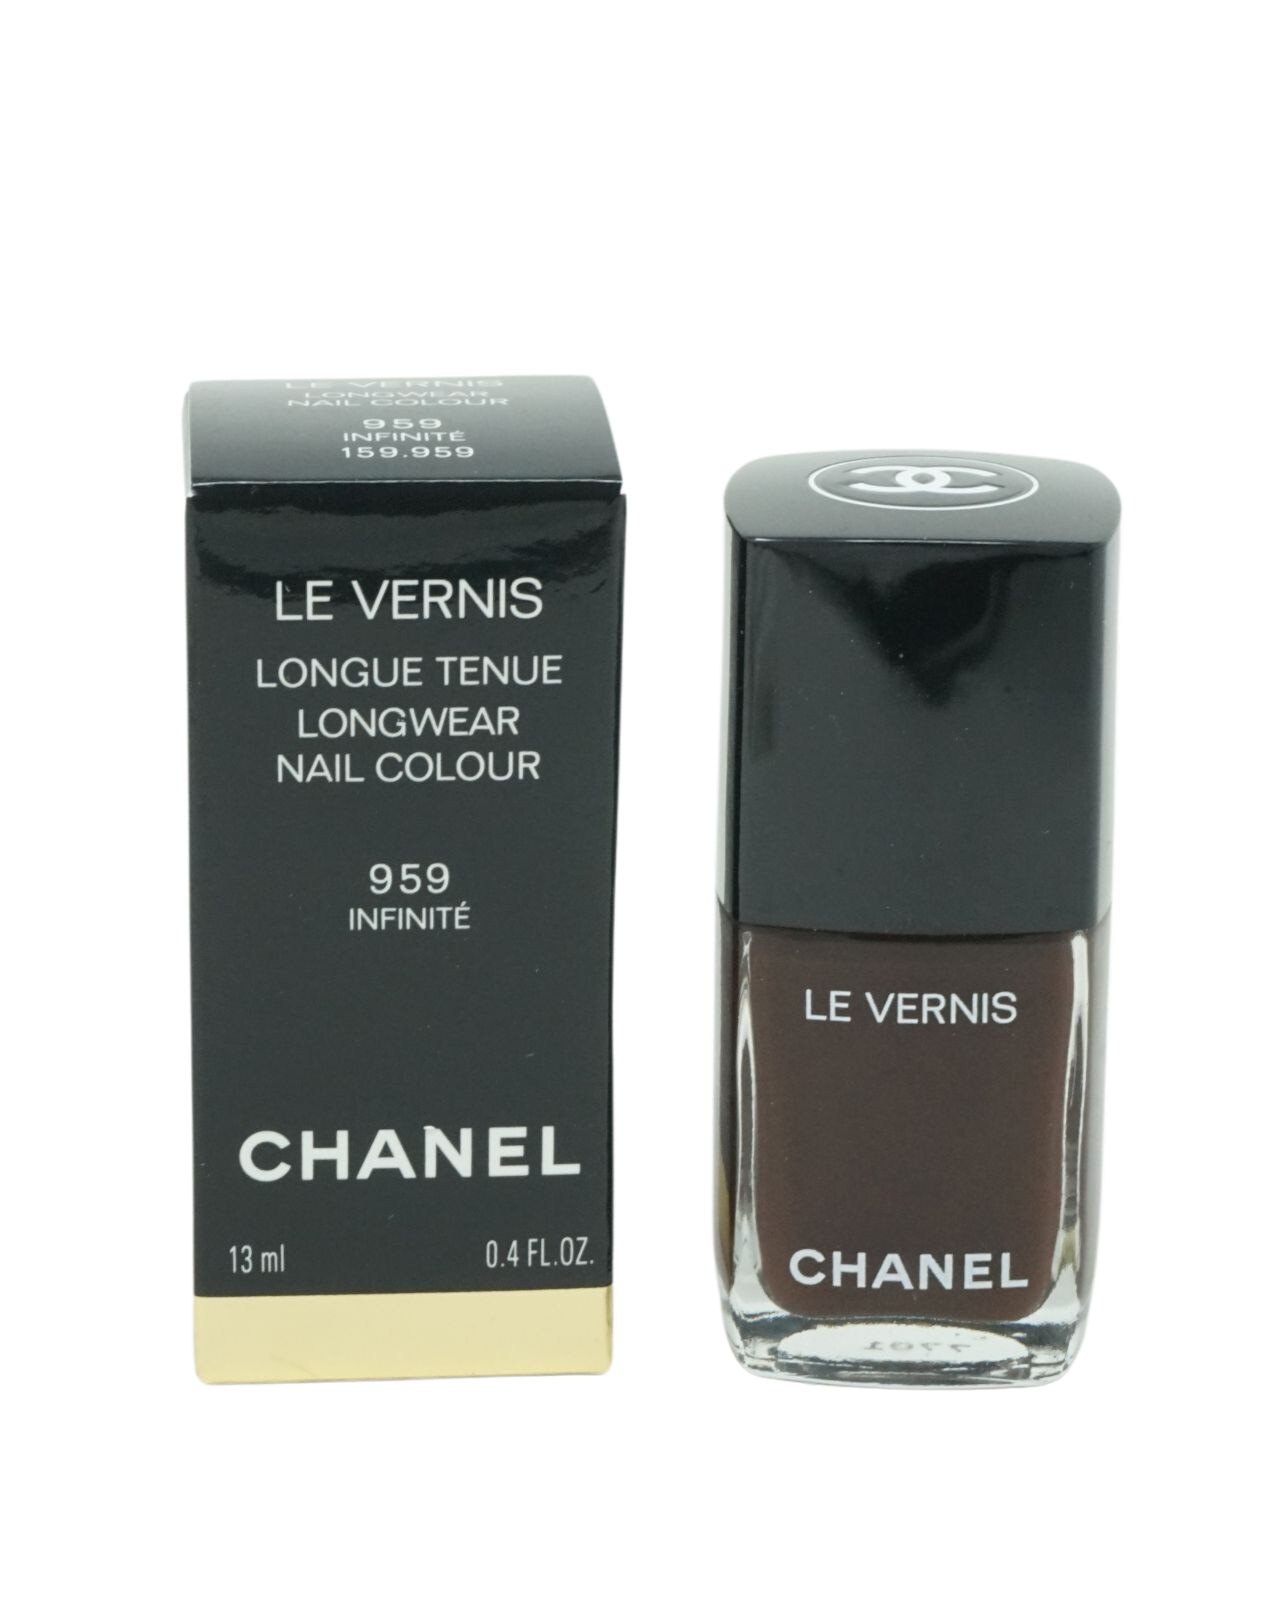 CHANEL Nagellack Chanel Le Vernis Nagellack 13ml 959 Infinite